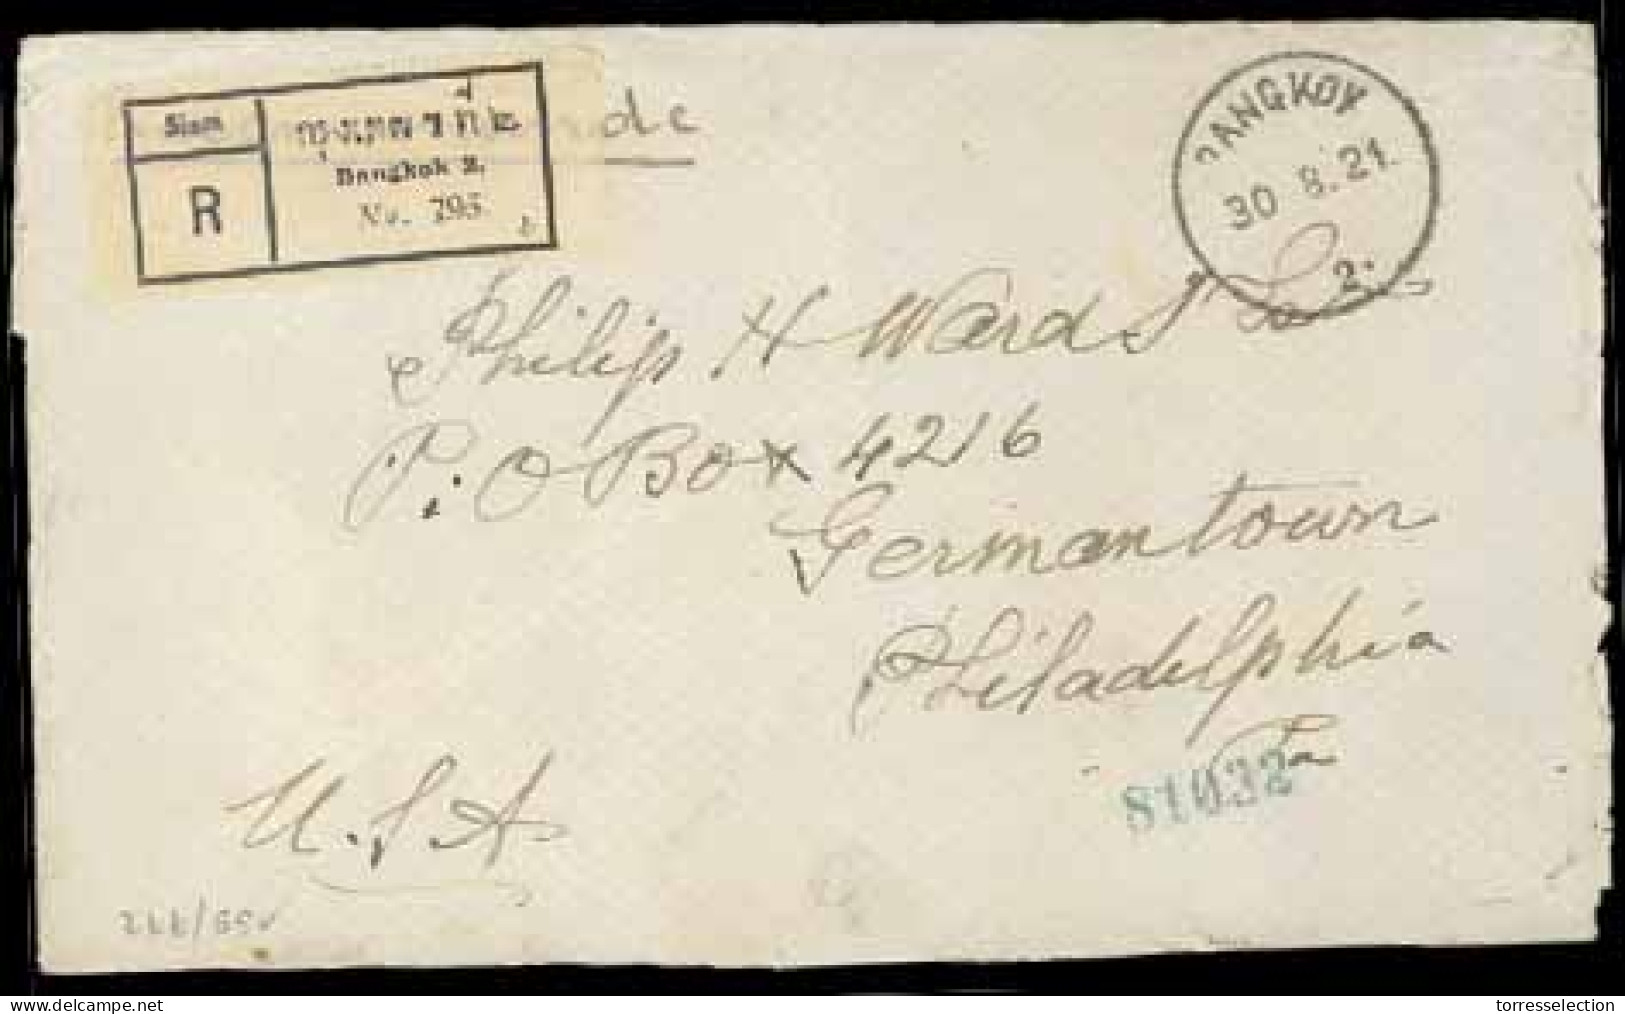 SIAM. 1921. Bangkok (district 2) To Philadelphia/USA. Registered Envelope With Stamps On Reverse 2stg, 5stg (2), 10stg,  - Siam